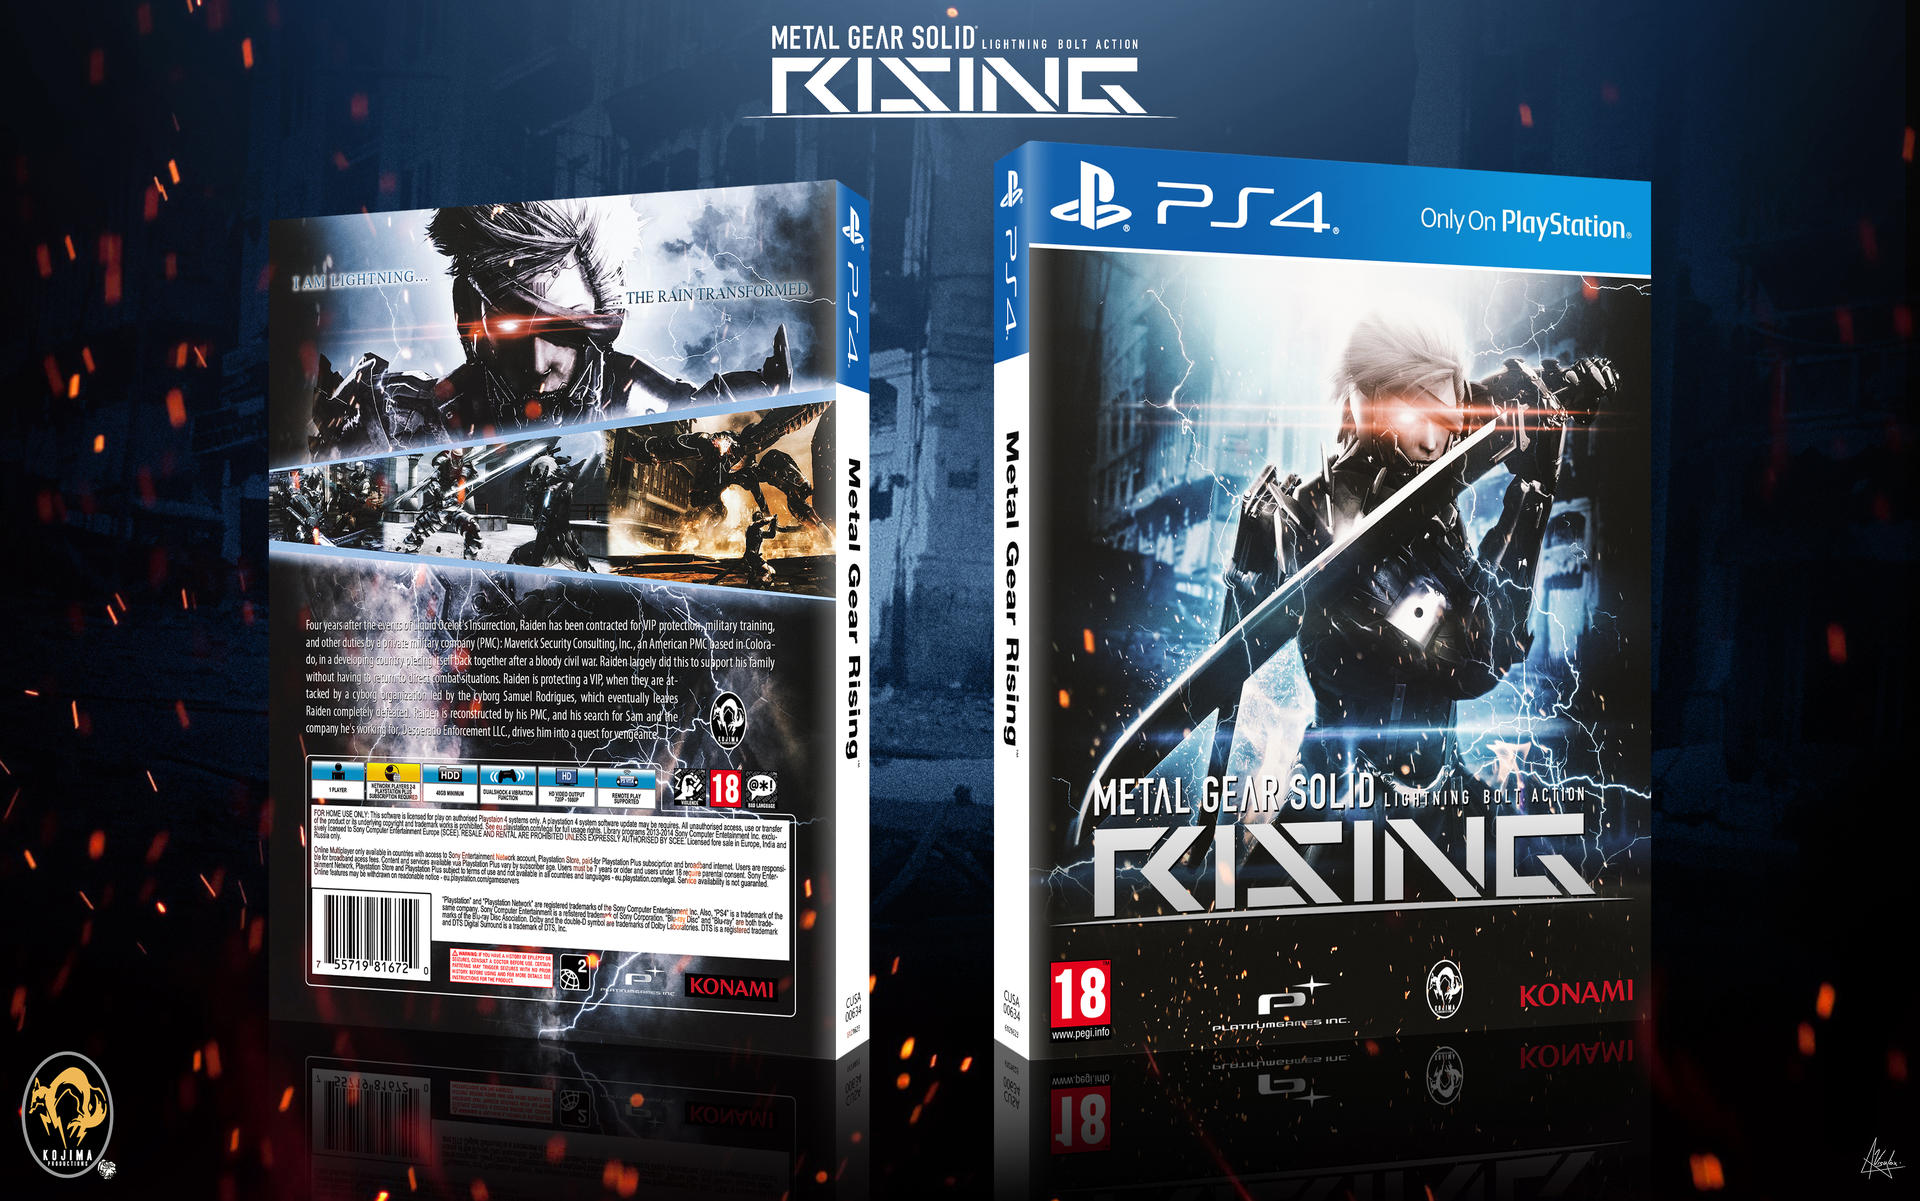 ArtStation - Metal Gear Solid Rising - PS4 Bundle